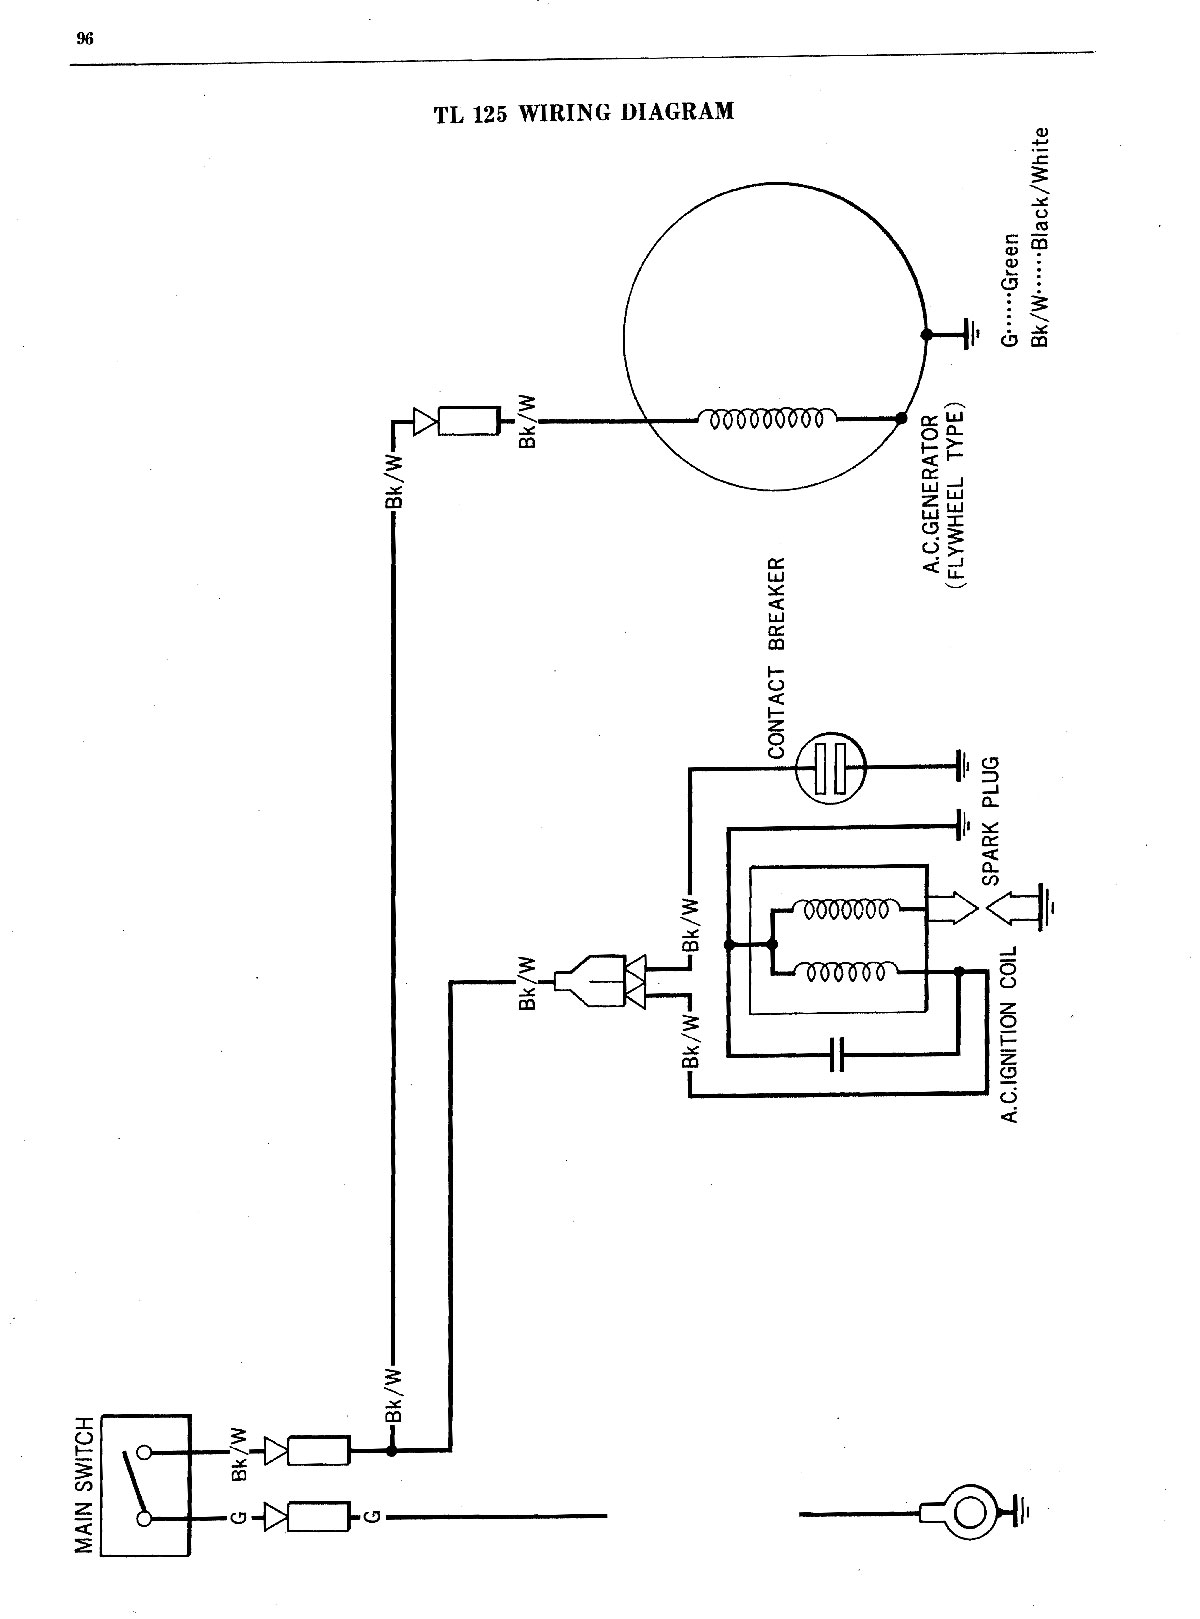 1985 Cr250r diagram honda wiring #1